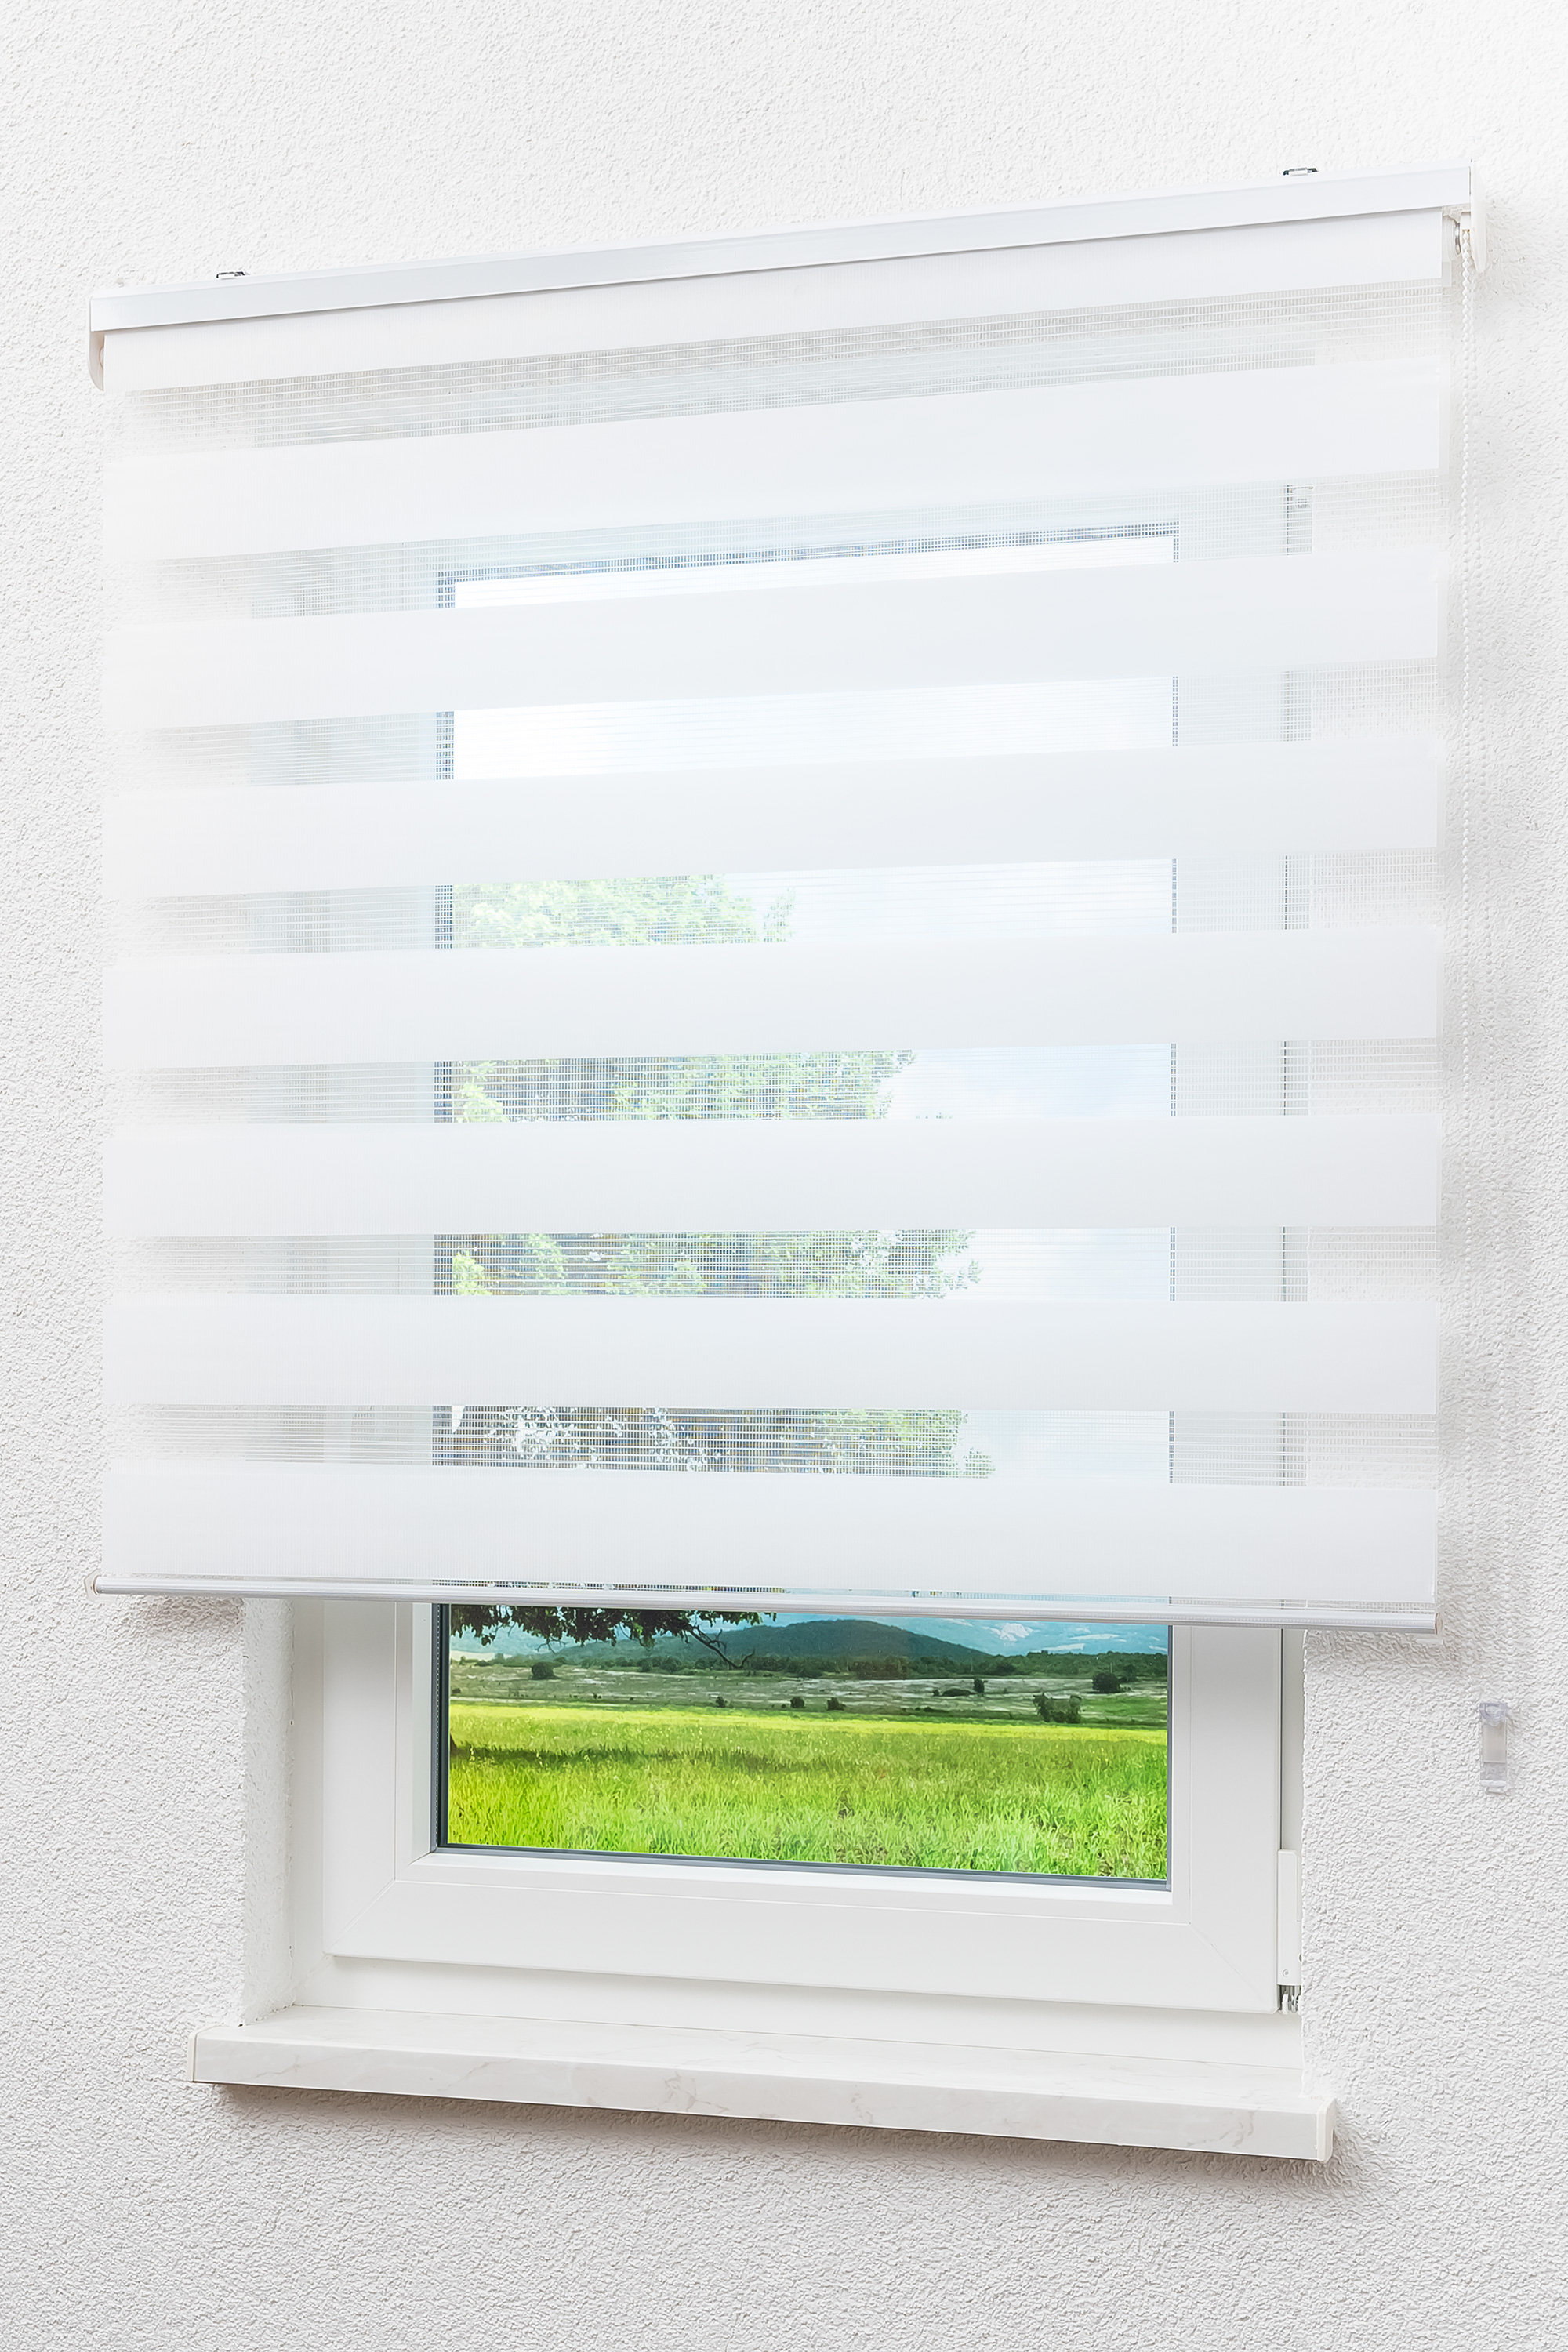 Blende Solid Fenster blickdicht | eBay Duo Tür Rollo mit Lysel Doppelrollo Outlet